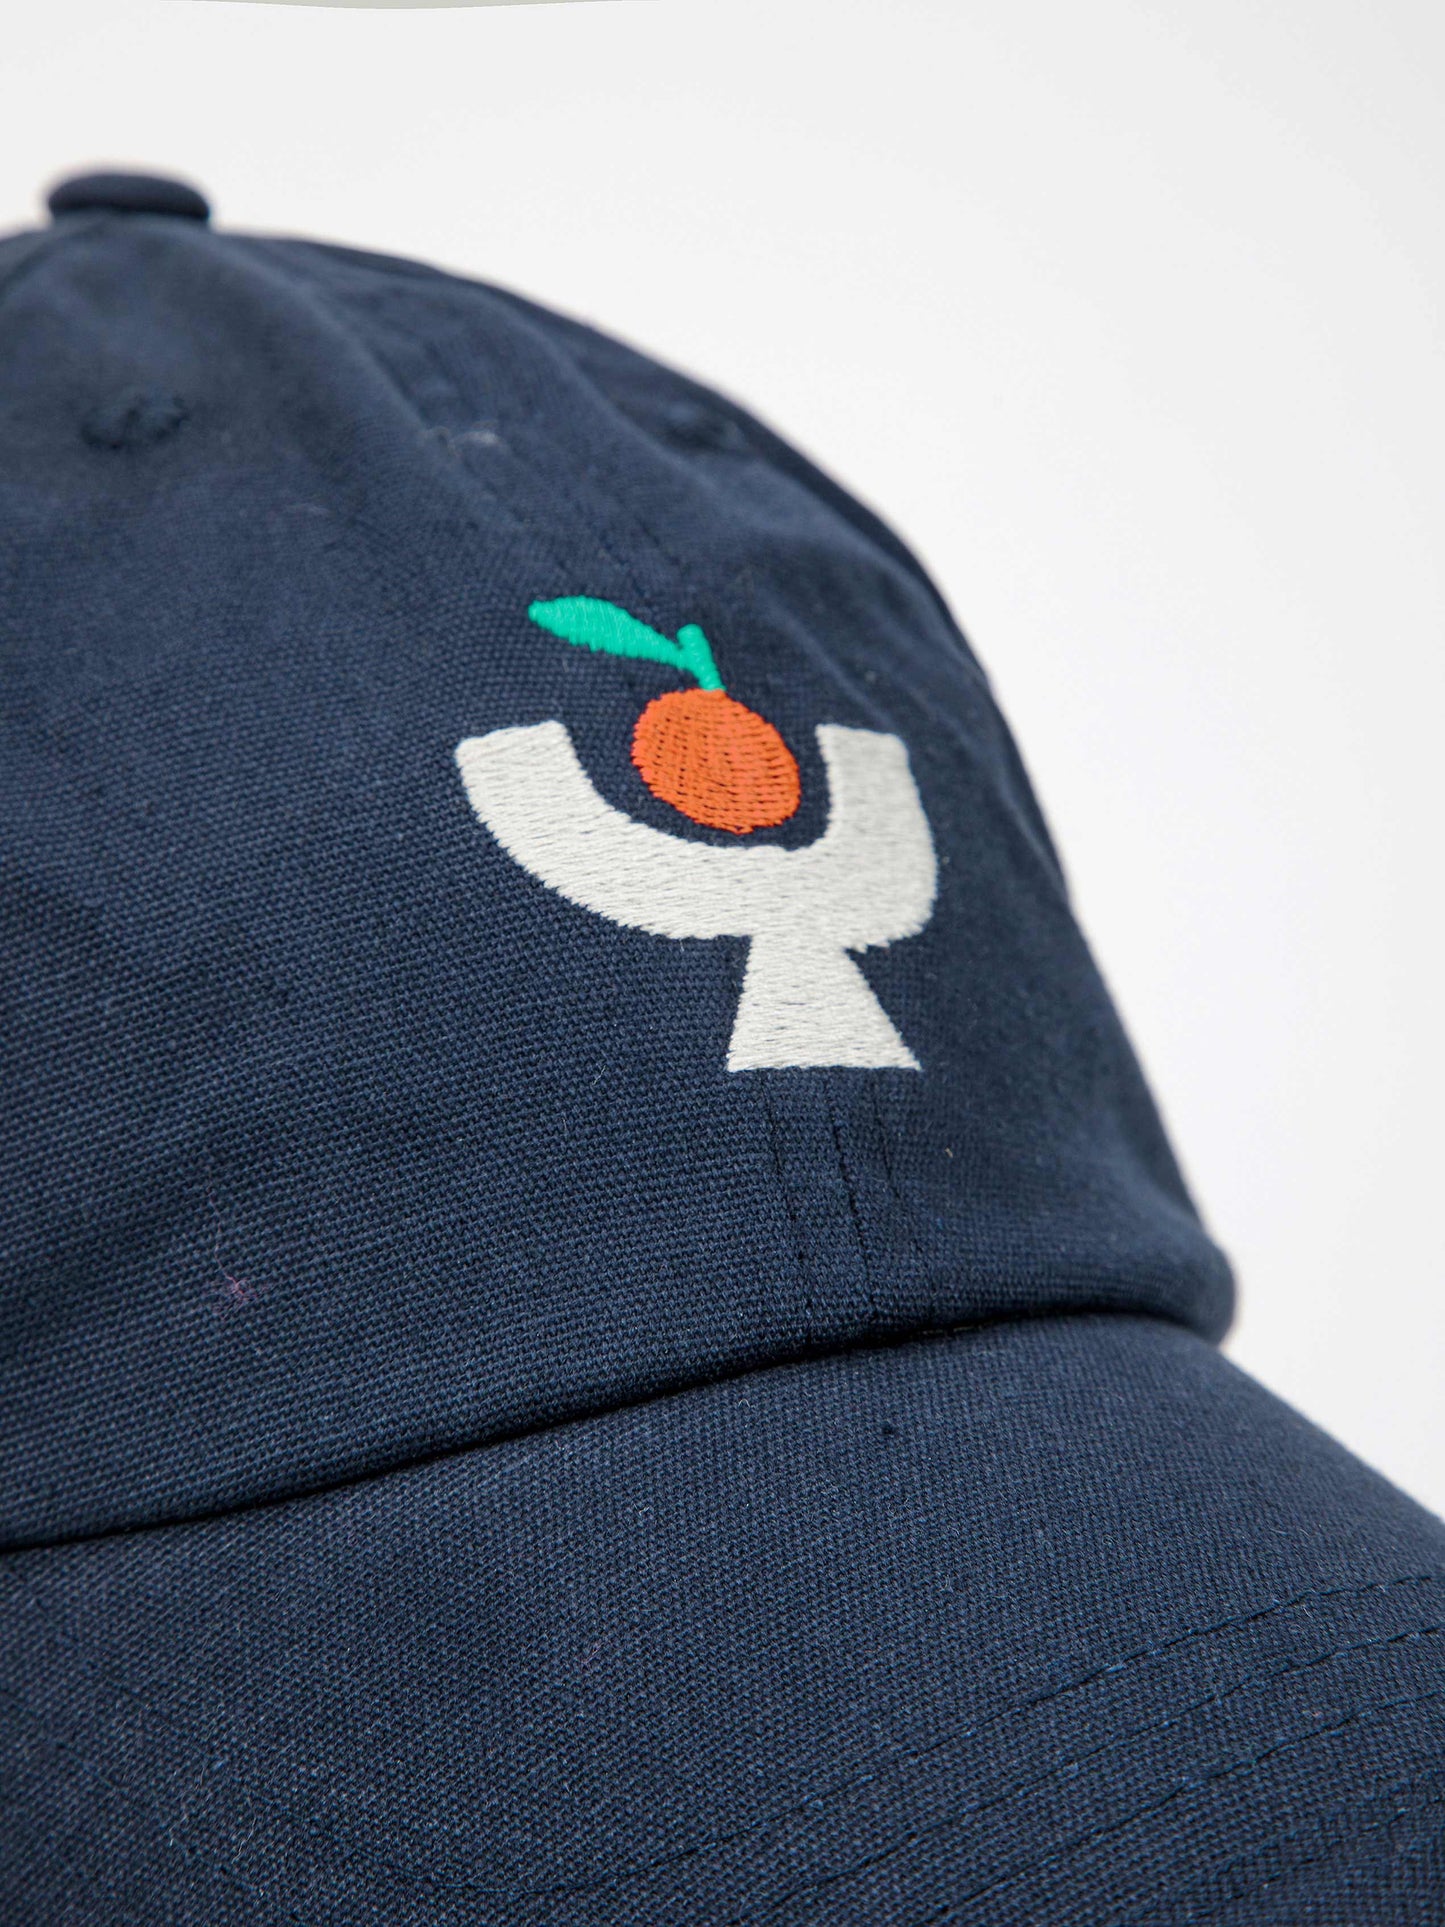 Tomato plate embroidery cap